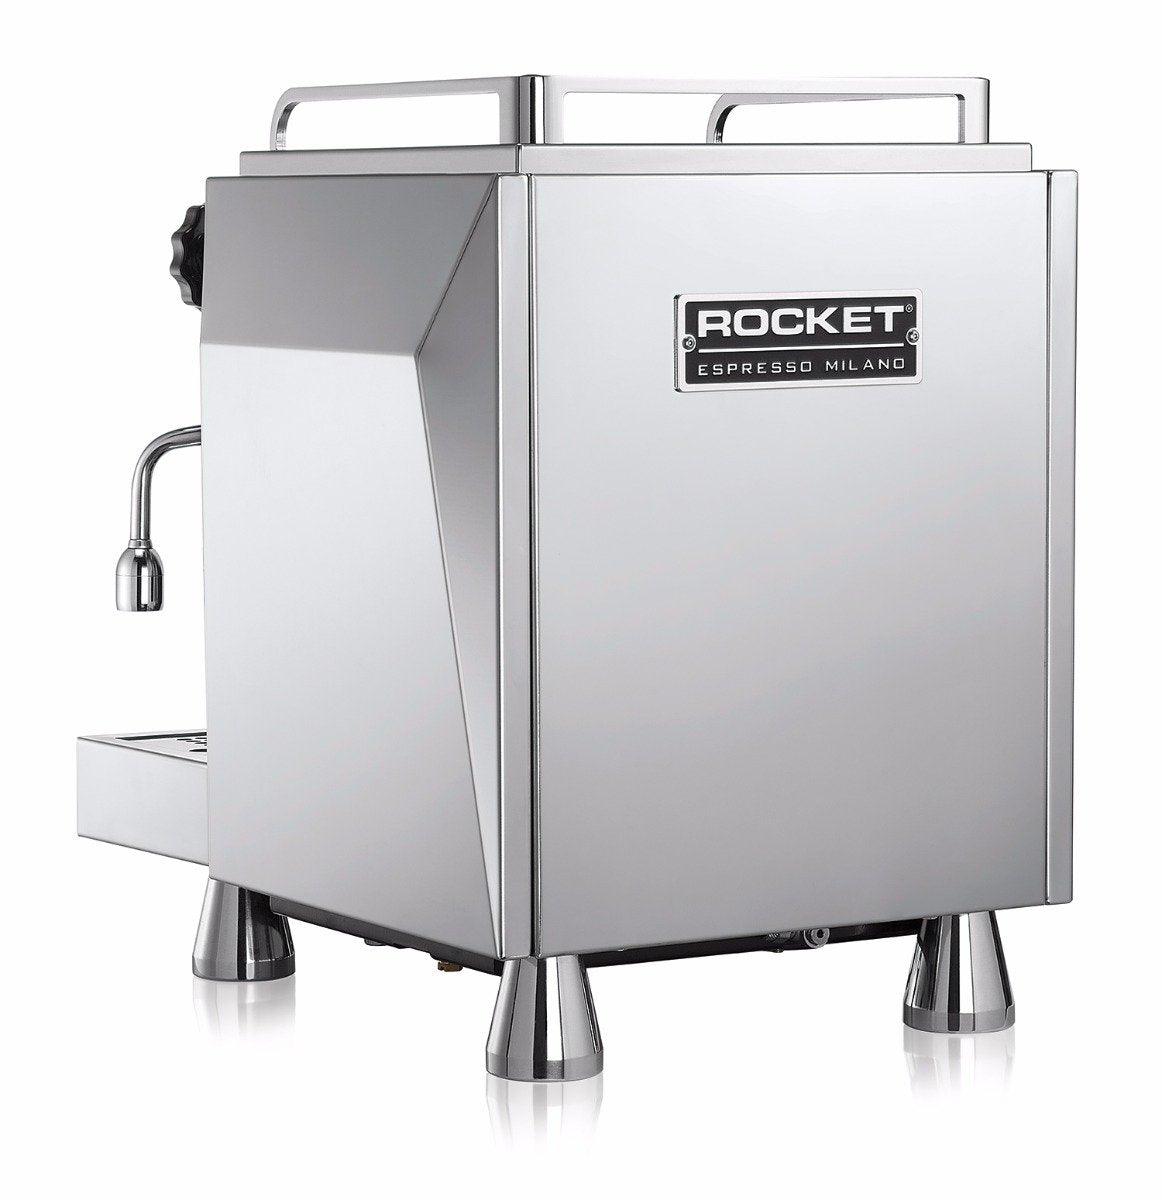 Rocket Espresso Giotto Cronometro R Espresso Machine with Flow Control